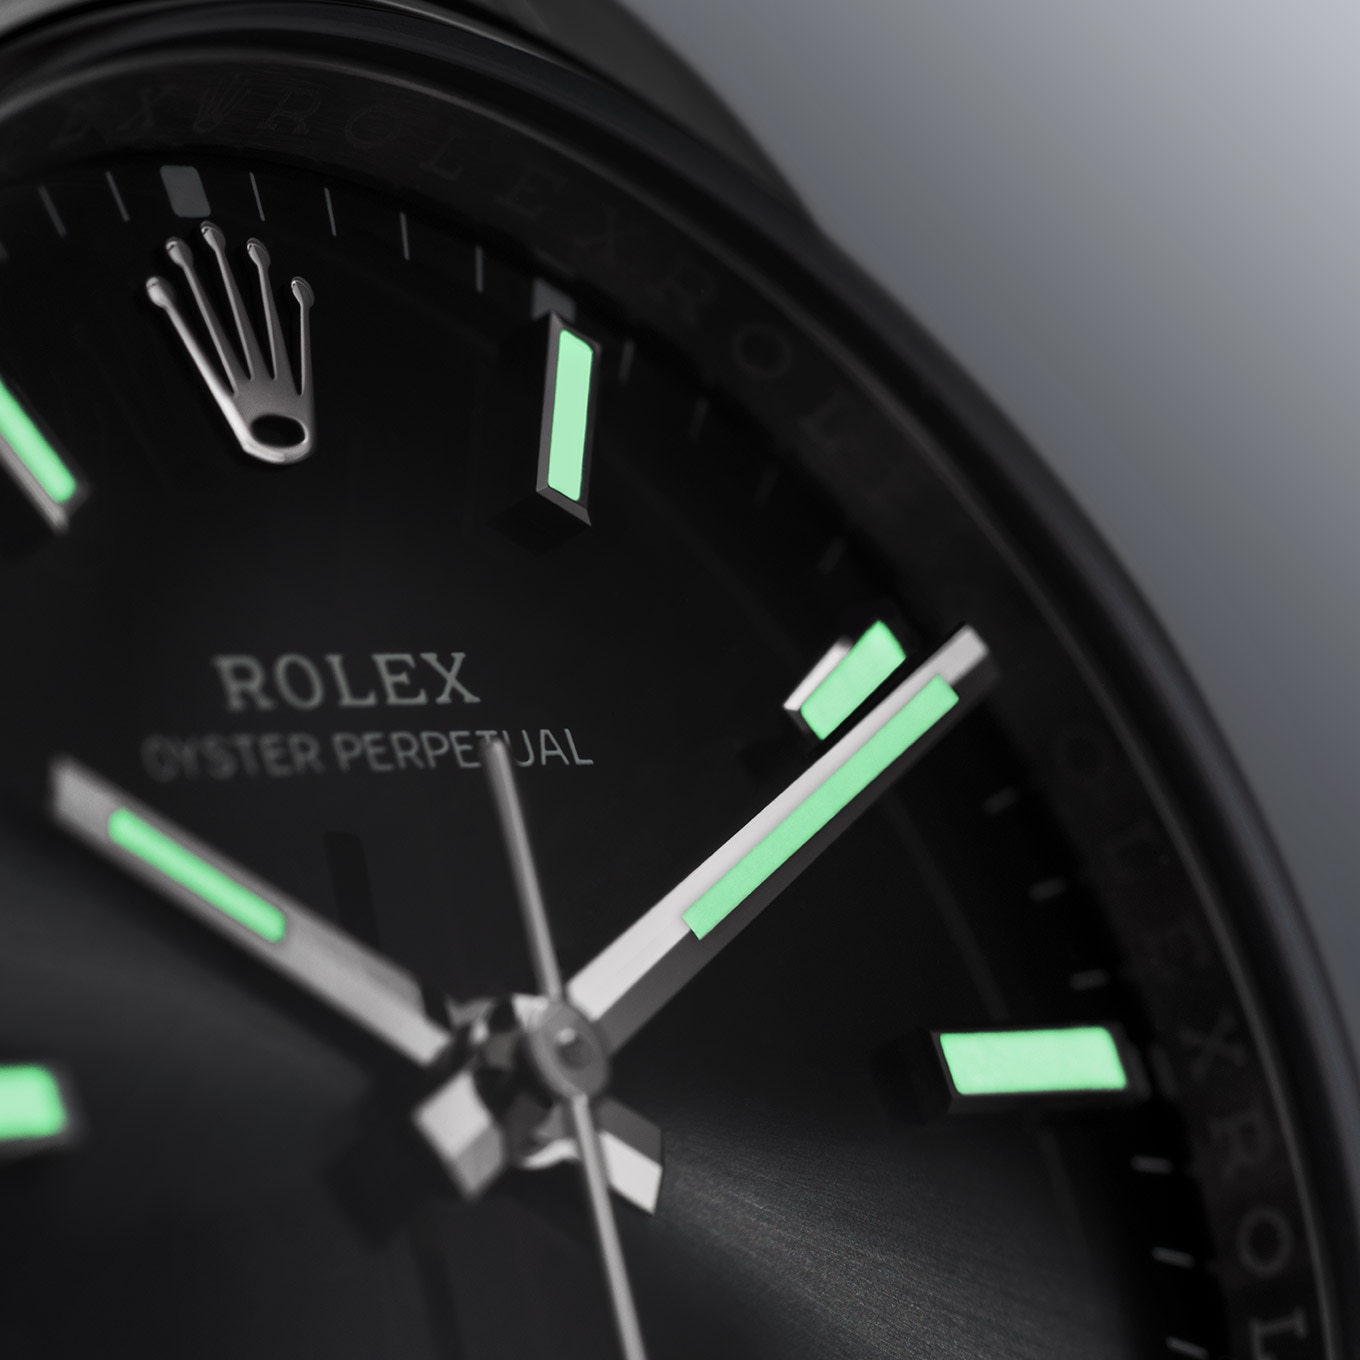 What Is Best Website To Buy Replica Rolex Watches